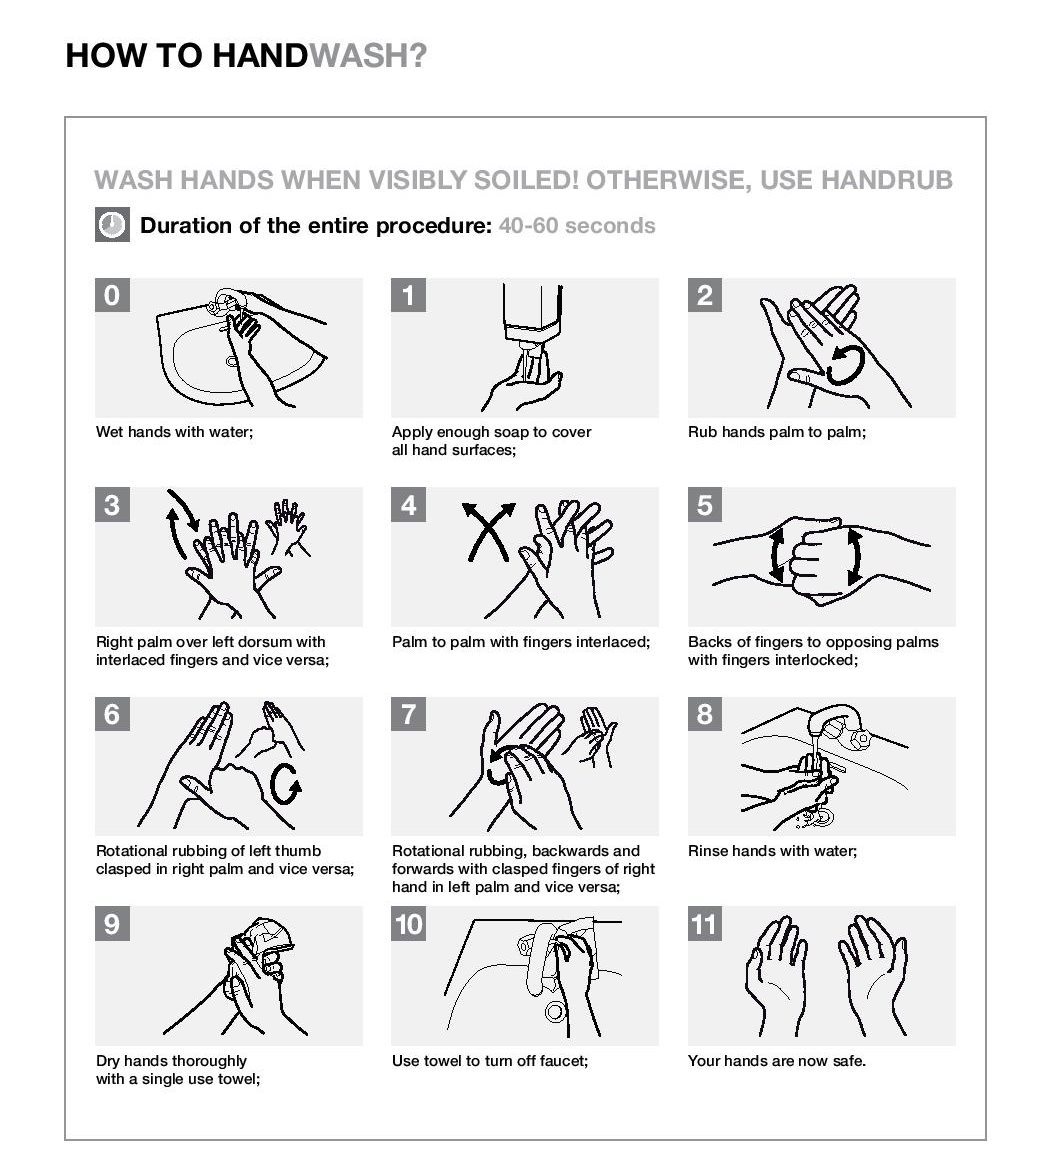 Handwashing Basics and Tips